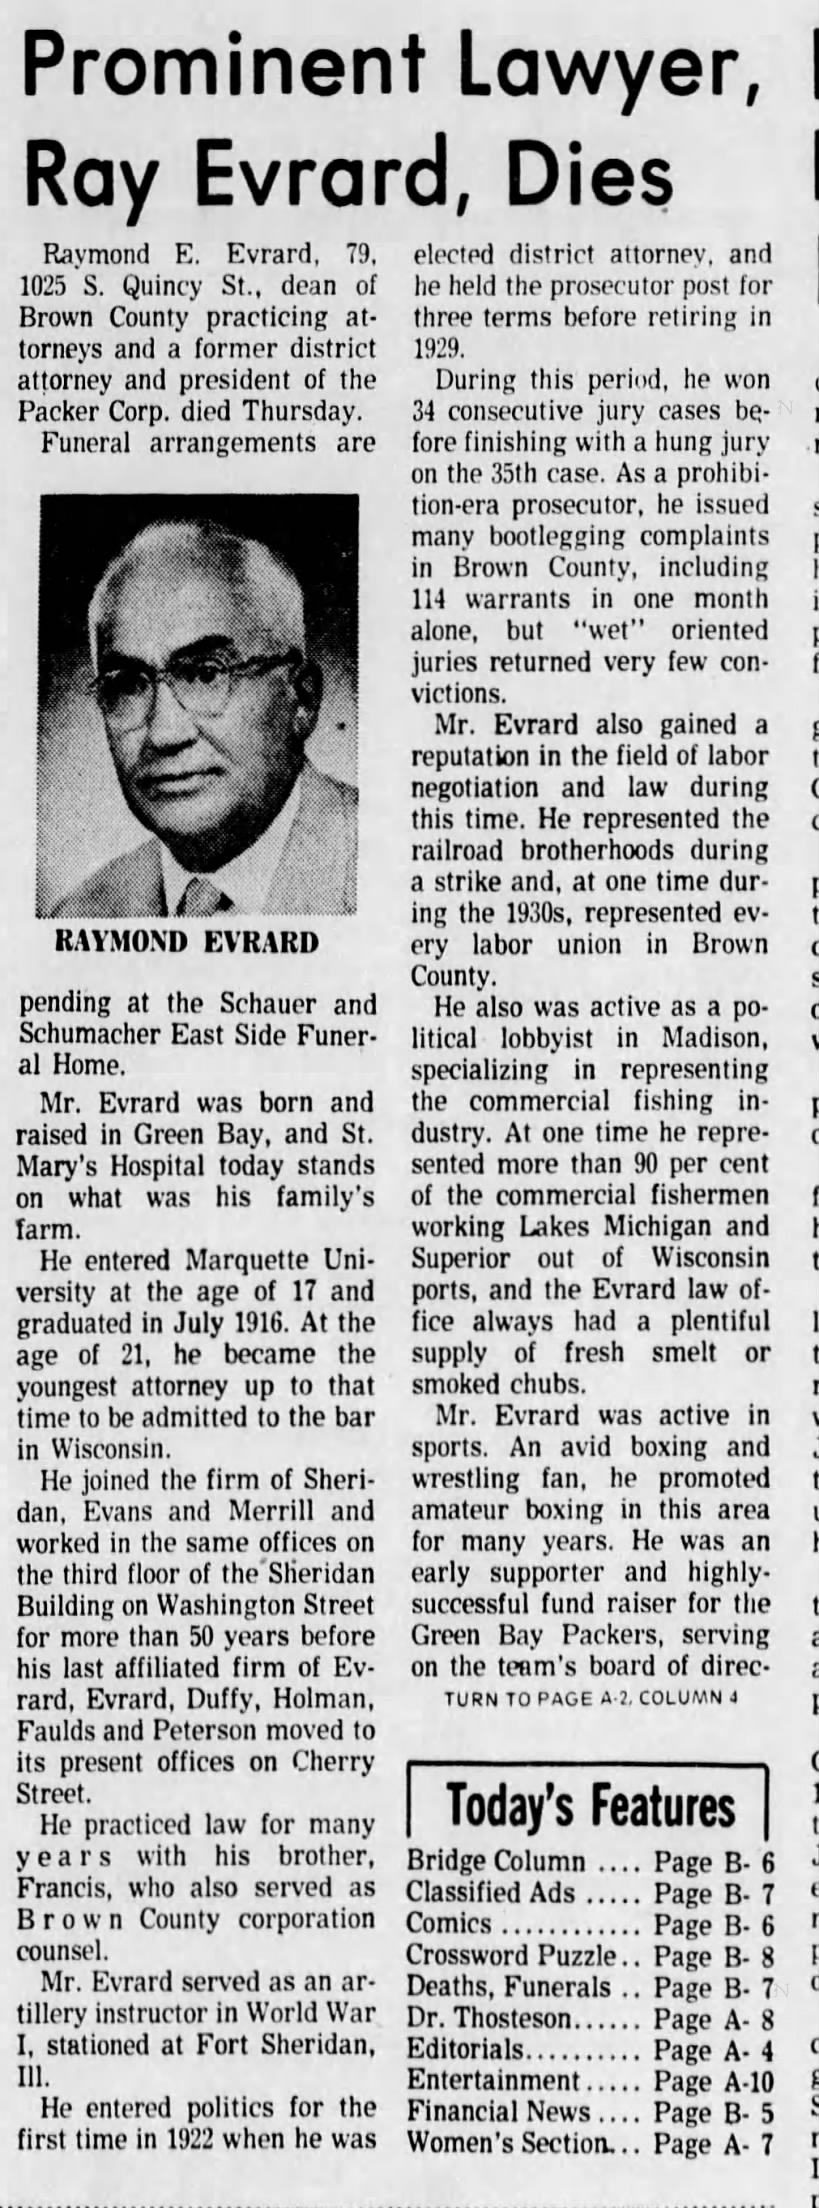 Ray Evrard obituary